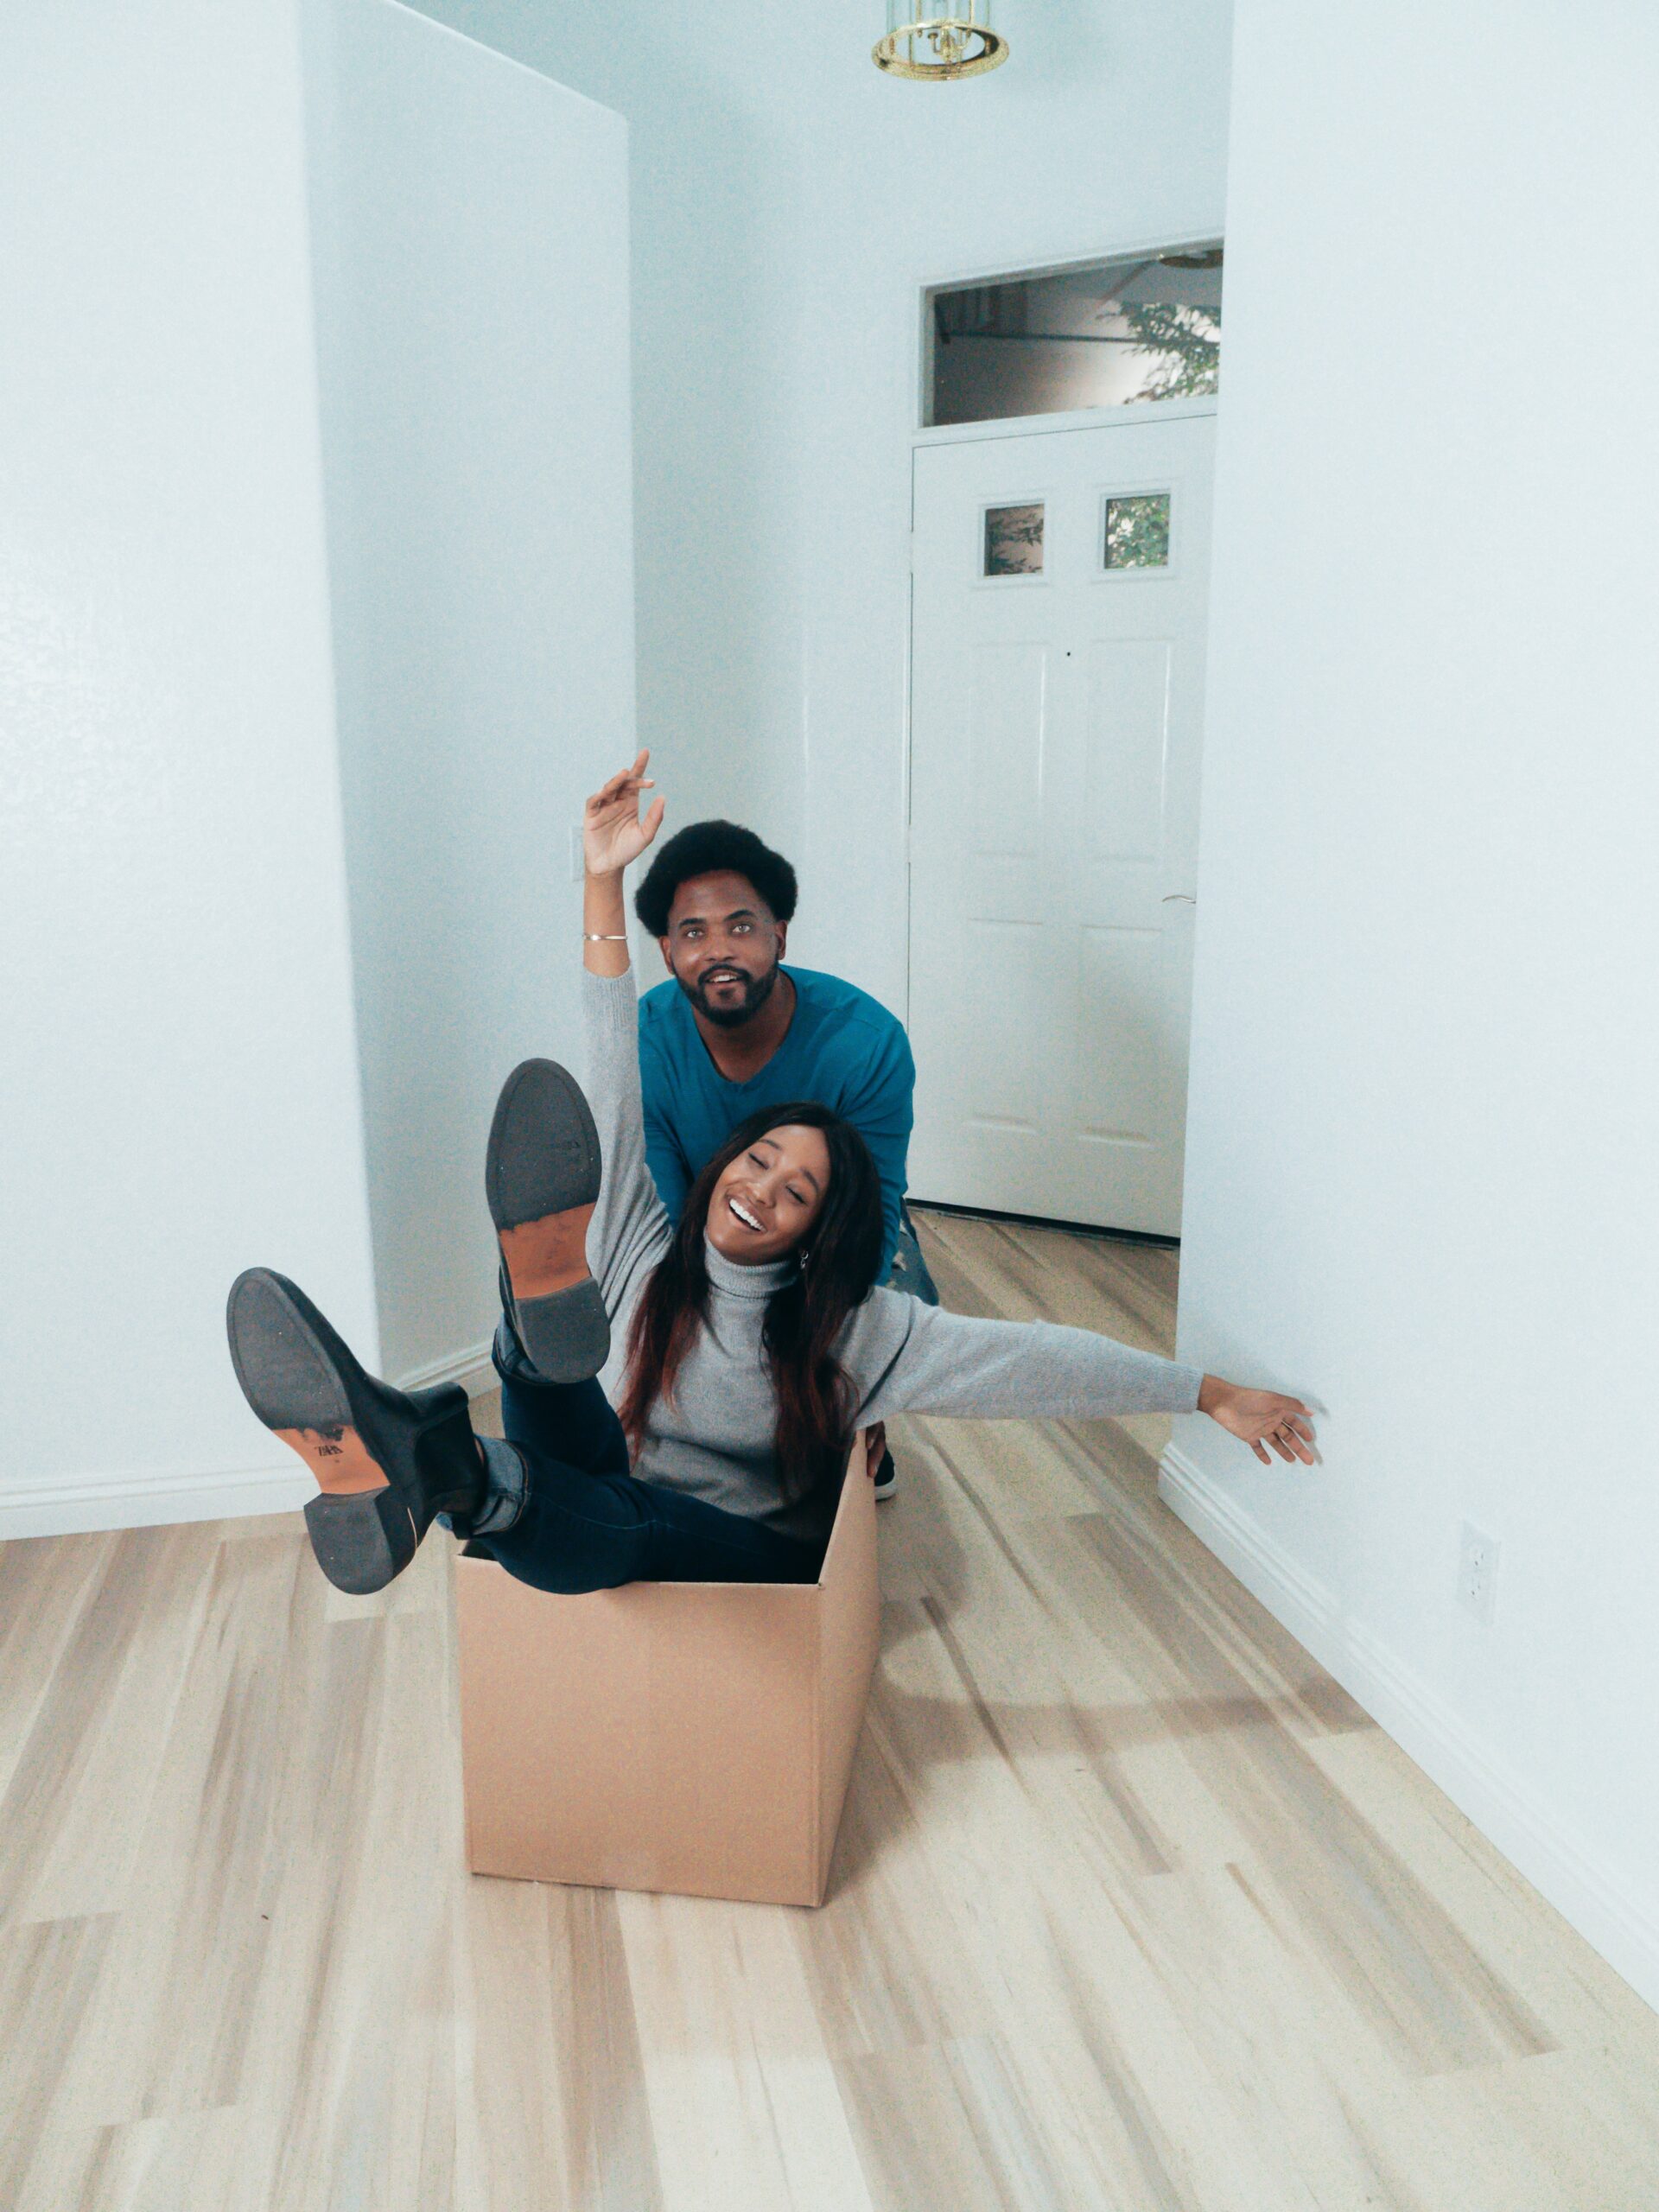 A man playfully pushing a woman sitting inside of cardboard box